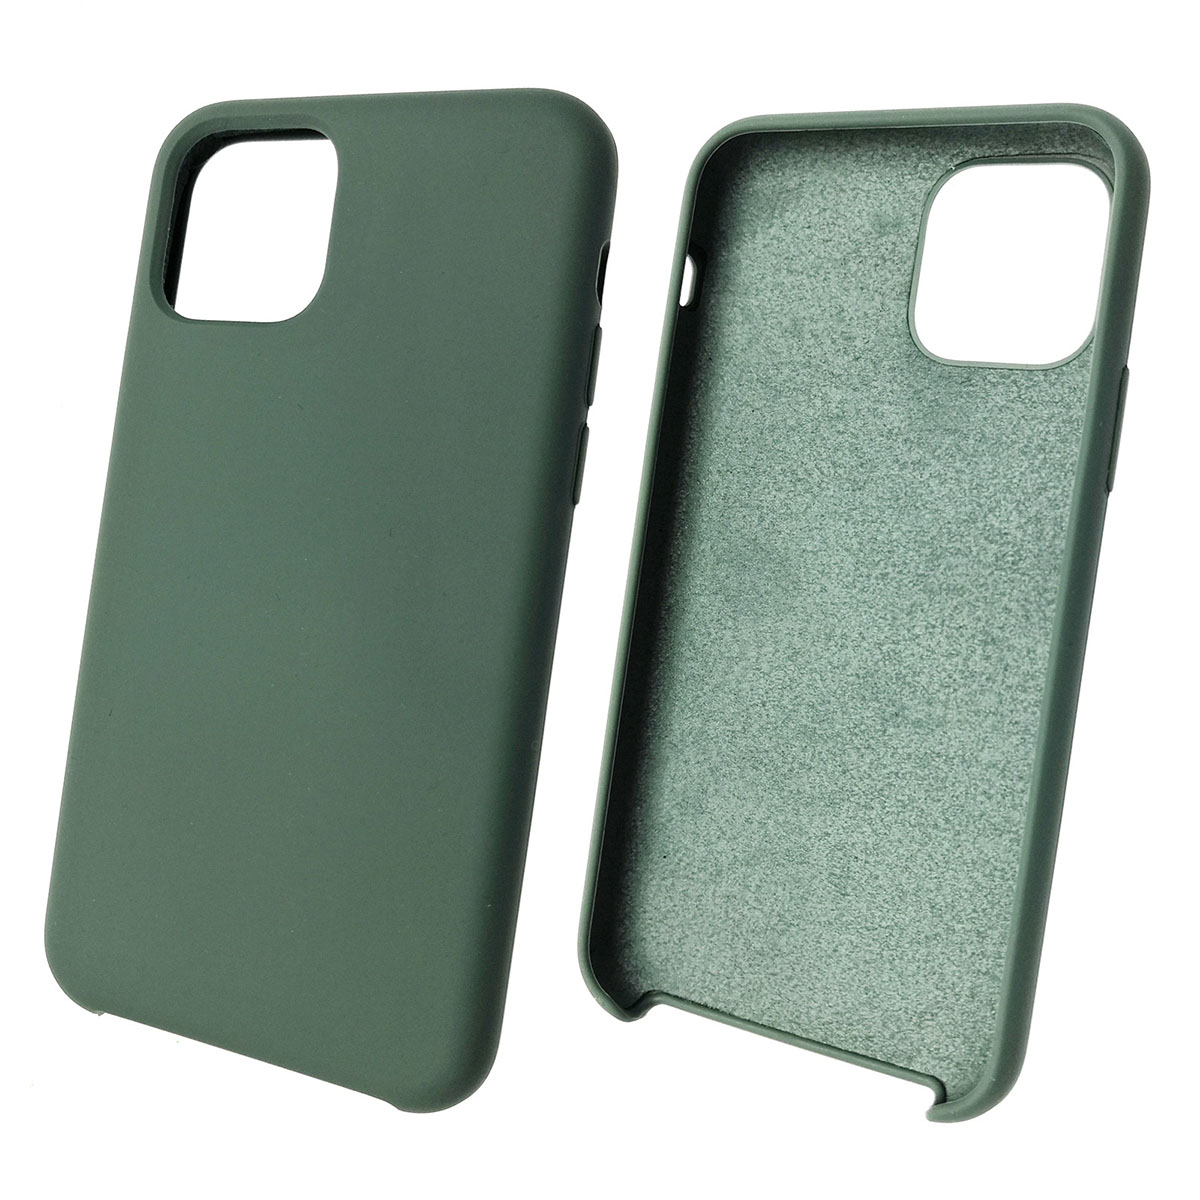 Чехол накладка Silicon Case для APPLE iPhone 11 Pro, силикон, бархат, цвет тихий зеленый.